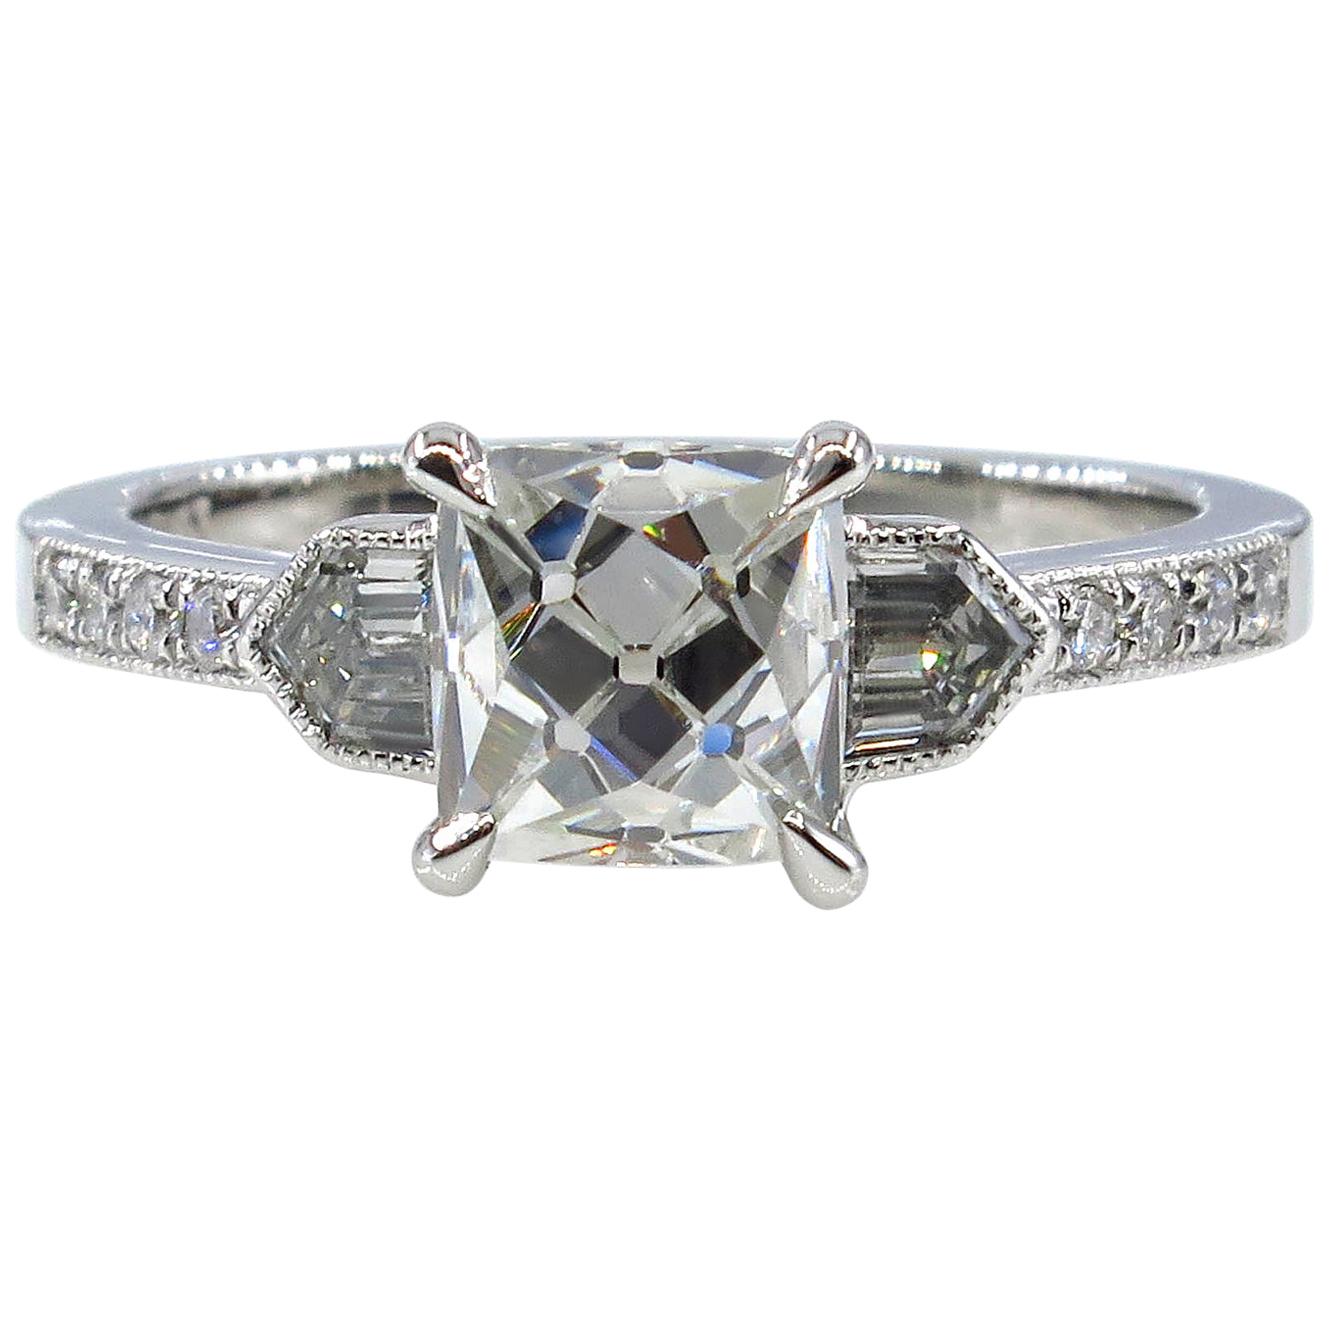 GIA 2.07 Carat Vintage French Cut Diamond Art Deco Style Trilogy Engagement Ring